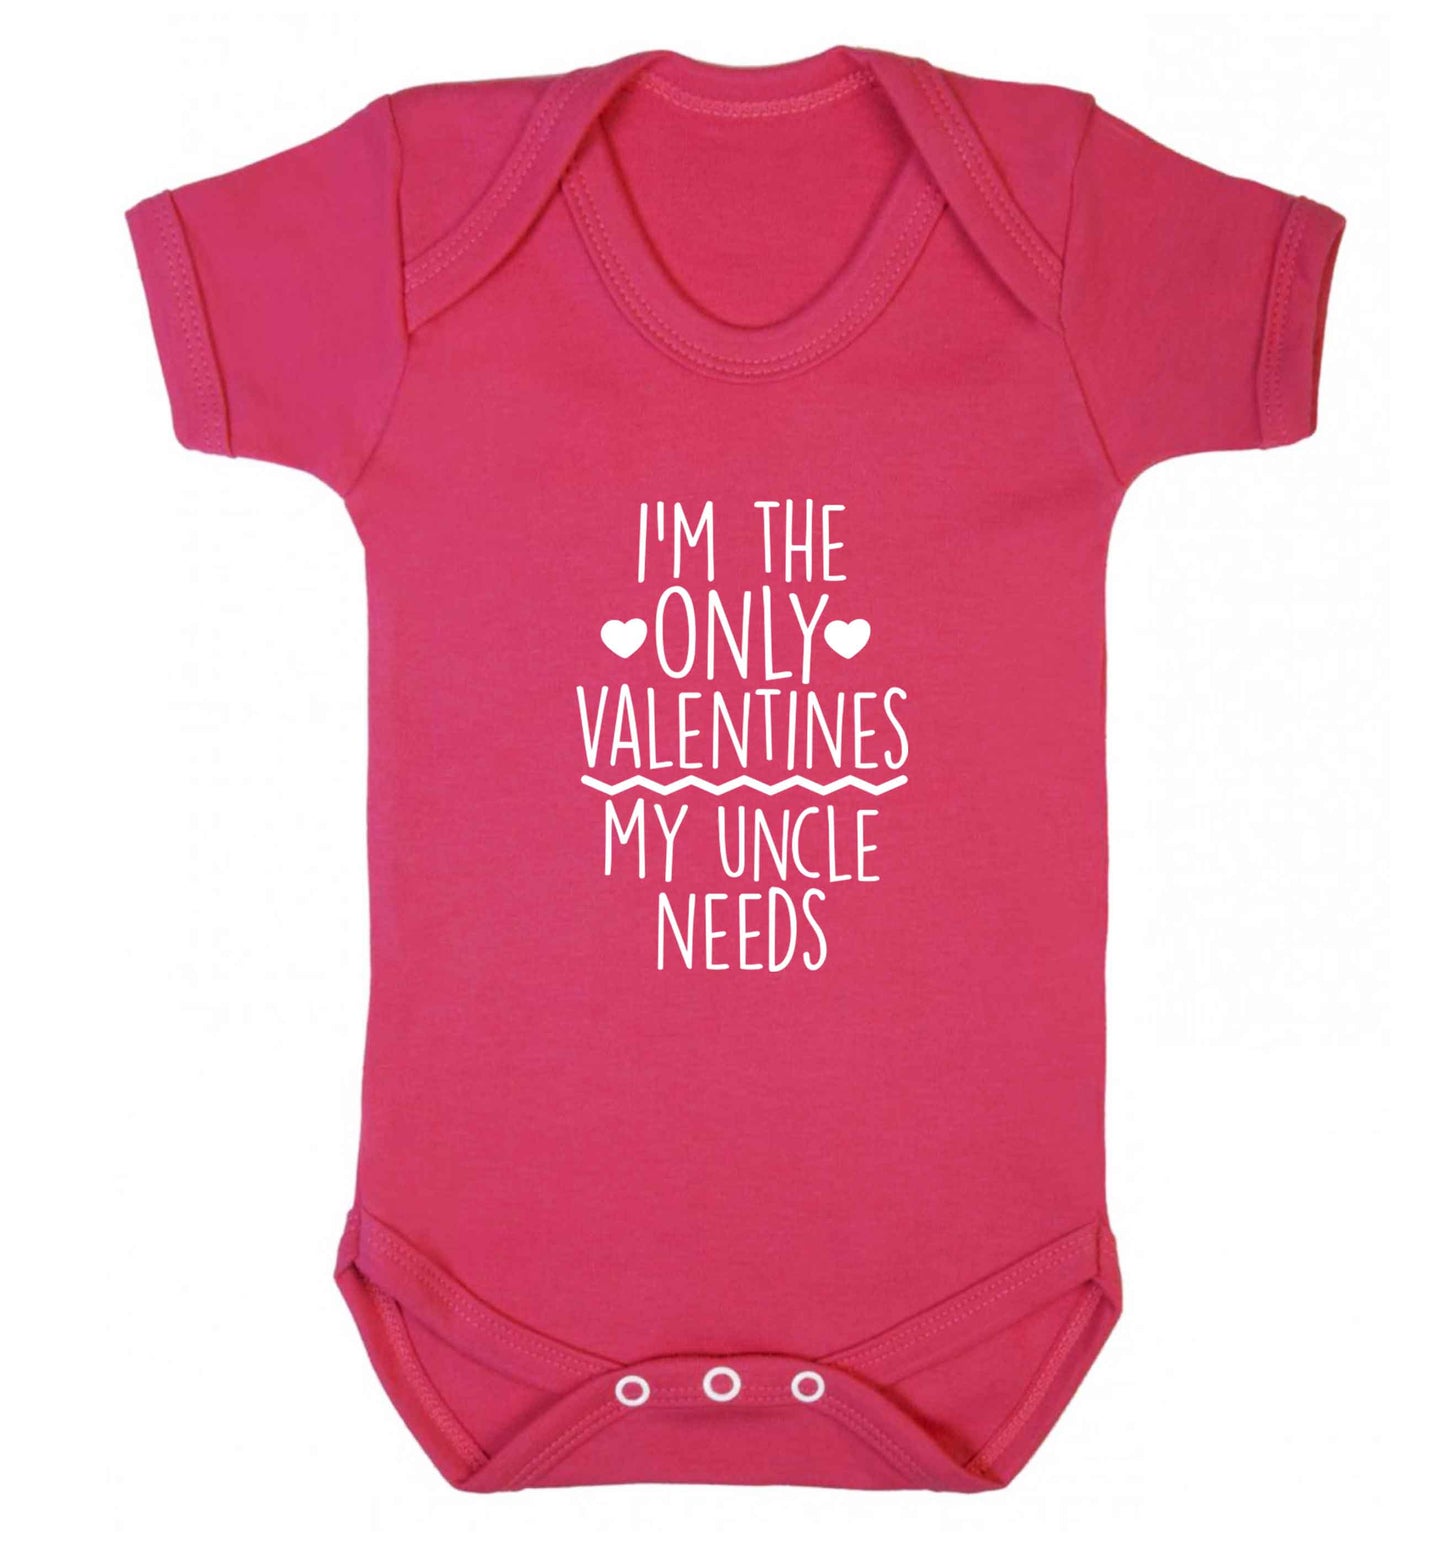 I'm the only valentines my uncle needs baby vest dark pink 18-24 months